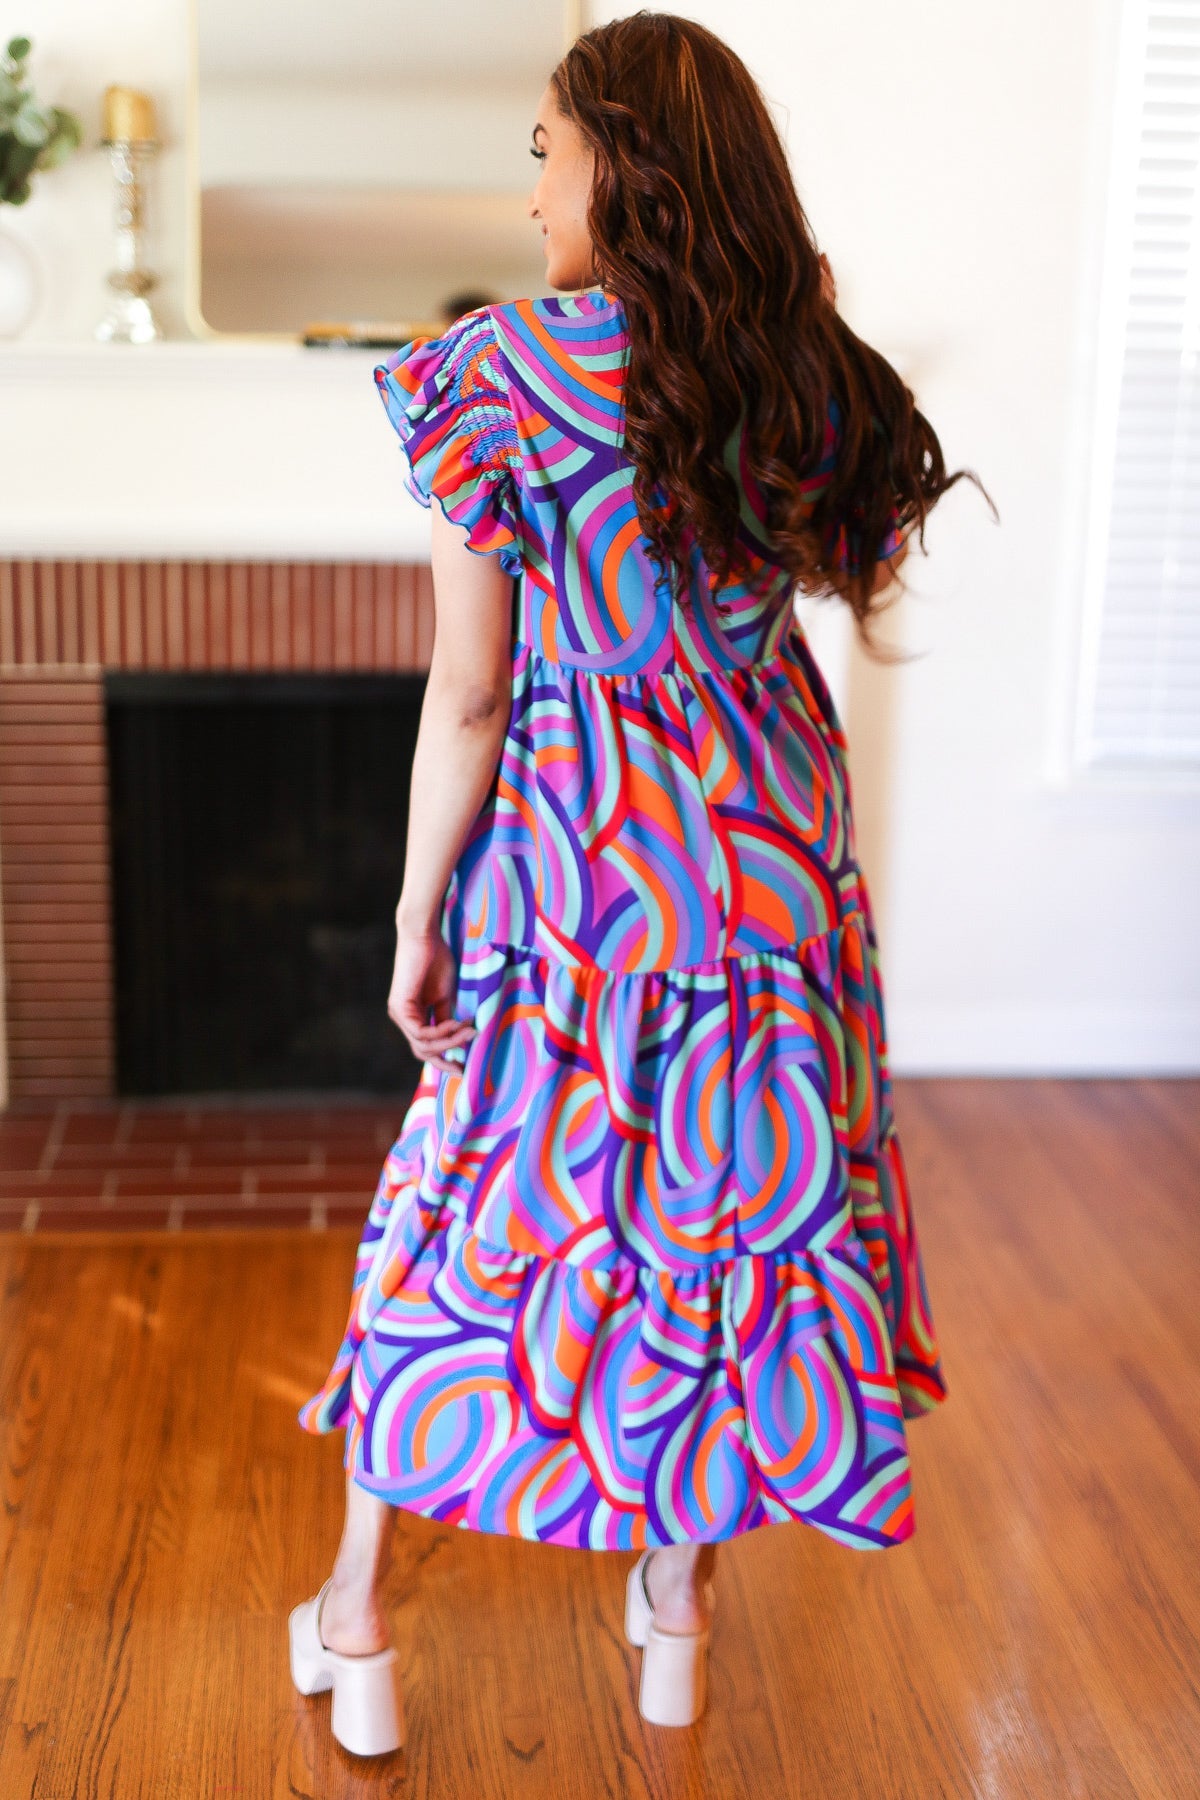 Feel Your Best Purple Abstract Print Smocked Ruffle Sleeve Maxi Dress Haptics